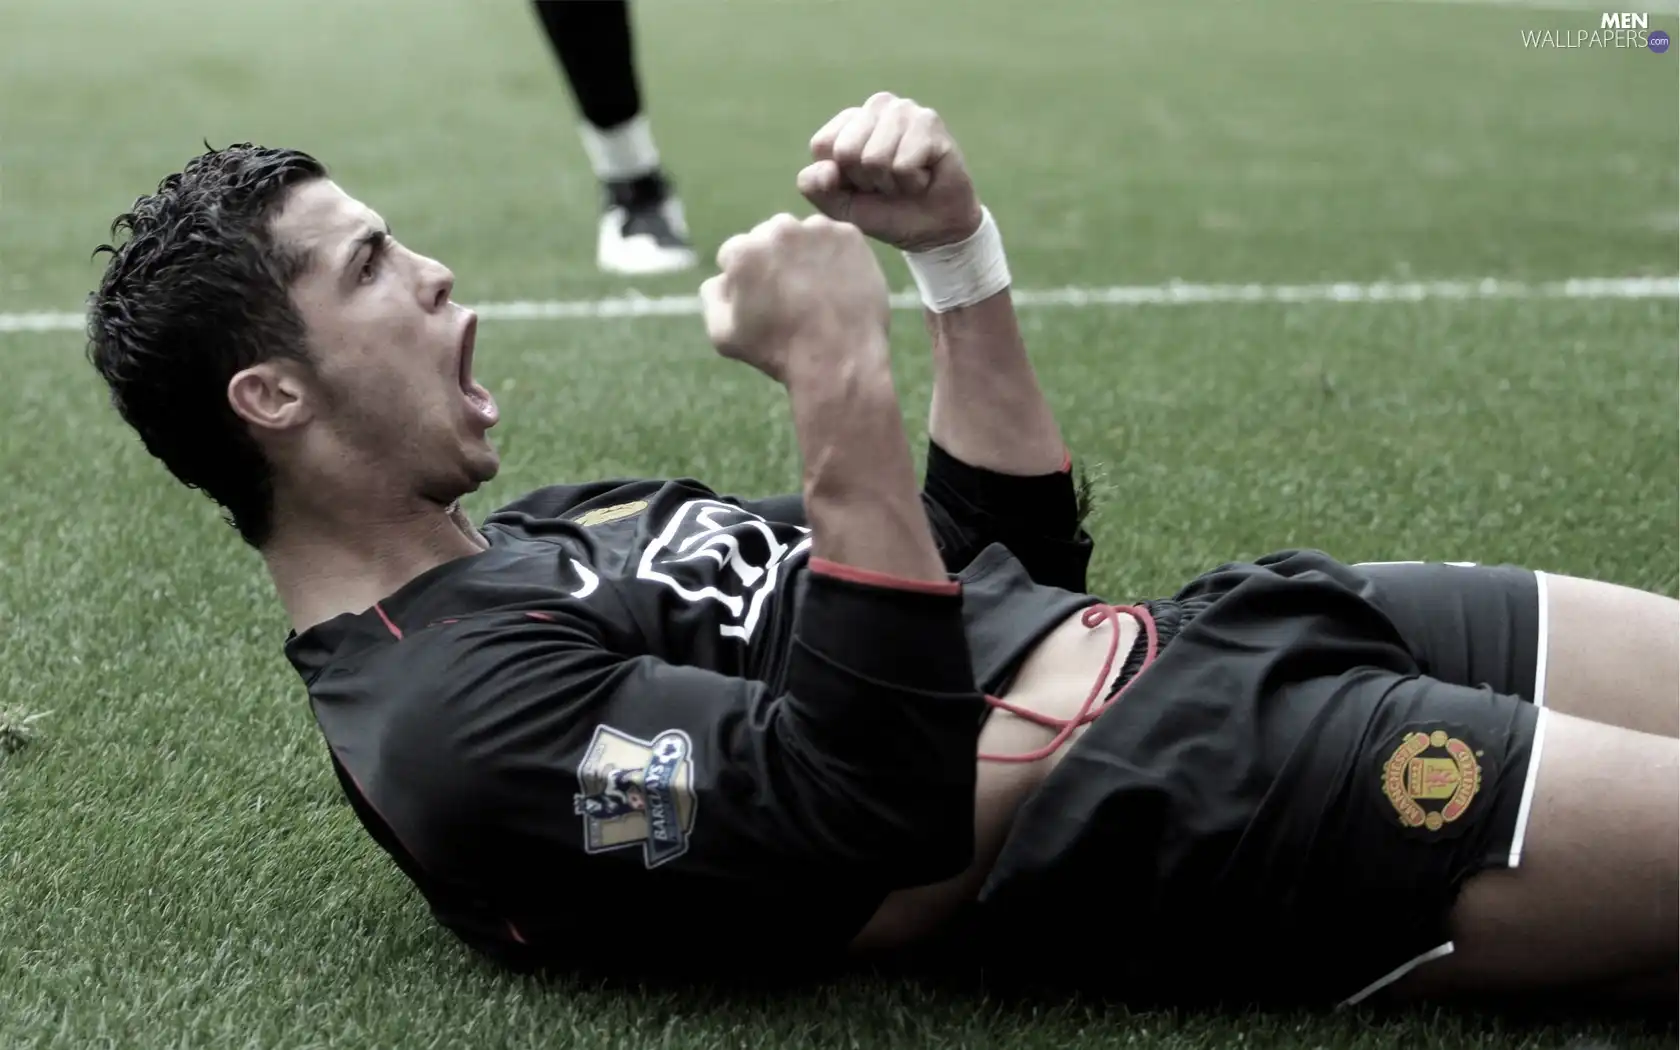 match, Cristiano Ronaldo, grass